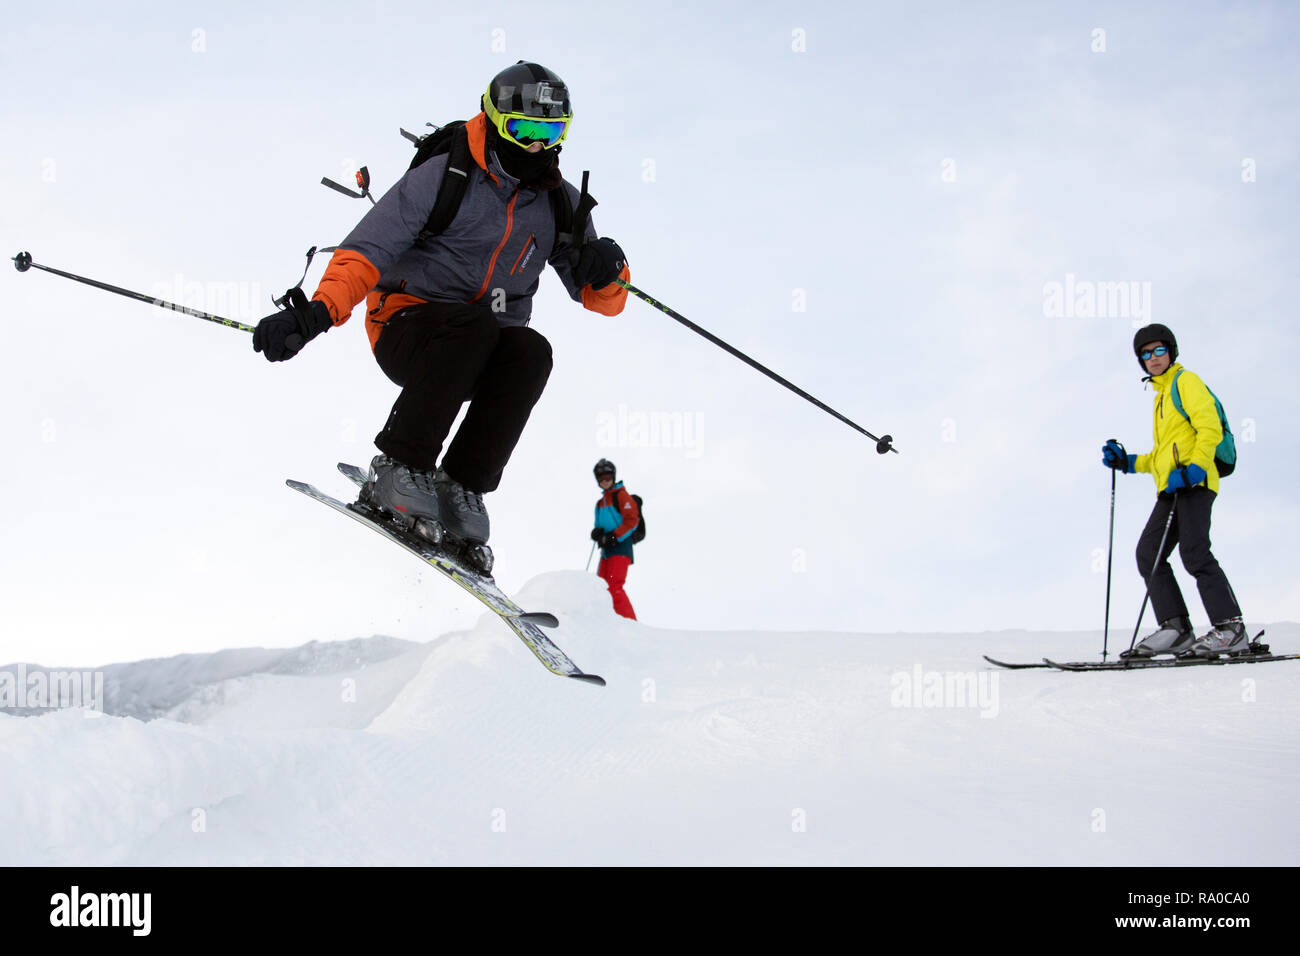 06.02.2018, Suedtirol, Reischach, Italien, Junge faehrt Ski. 00S180206D063CARO.JPG [MODEL RELEASE: NO, PROPERTY RELEASE: NOT APPLICABLE (c) caro image Stock Photo